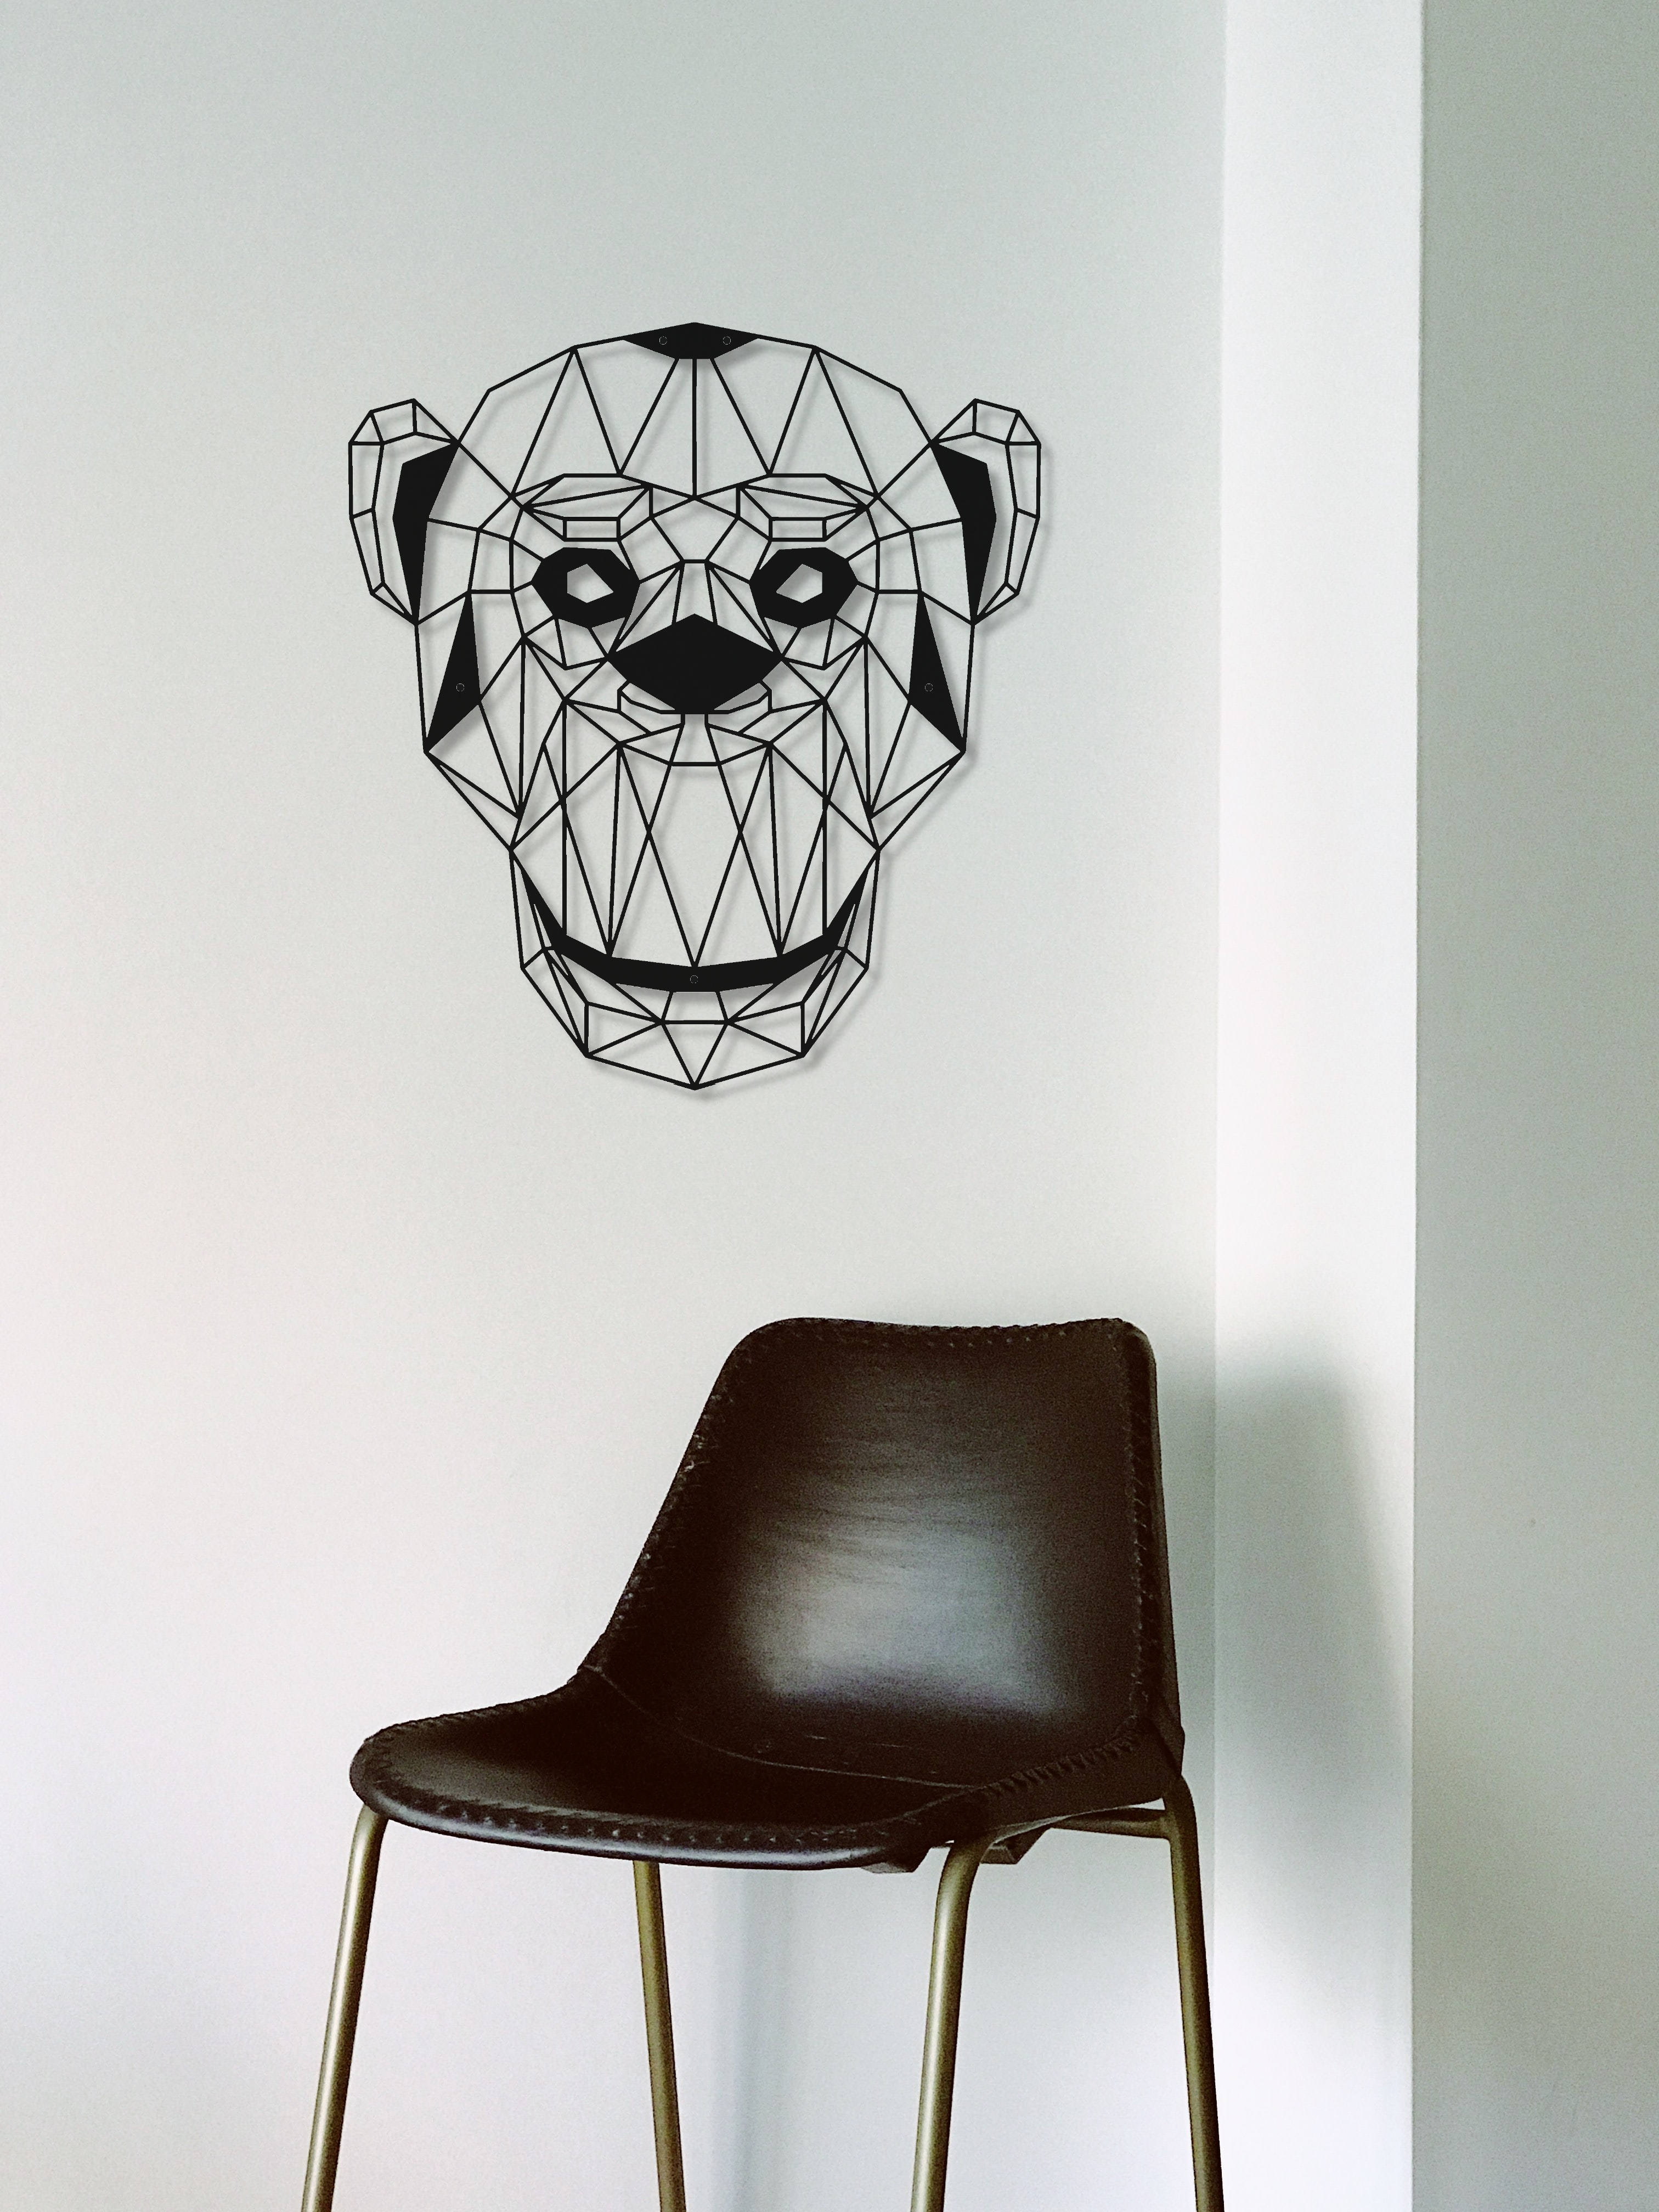 ・"Monkey"・Premium Metal Wall Art - Limited Edition